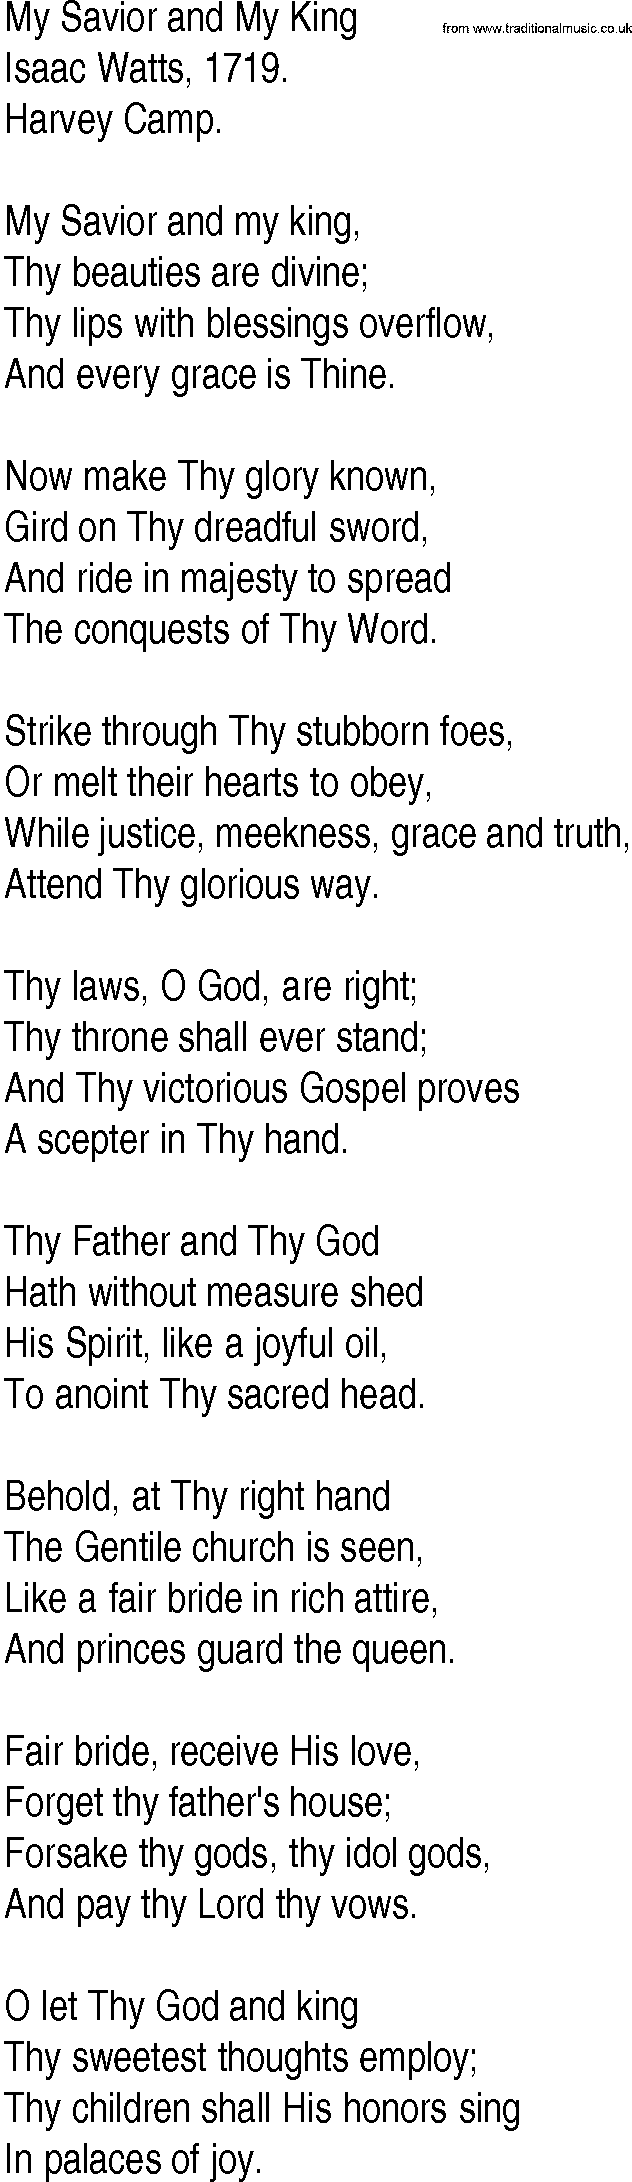 Hymn and Gospel Song: My Savior and My King by Isaac Watts lyrics